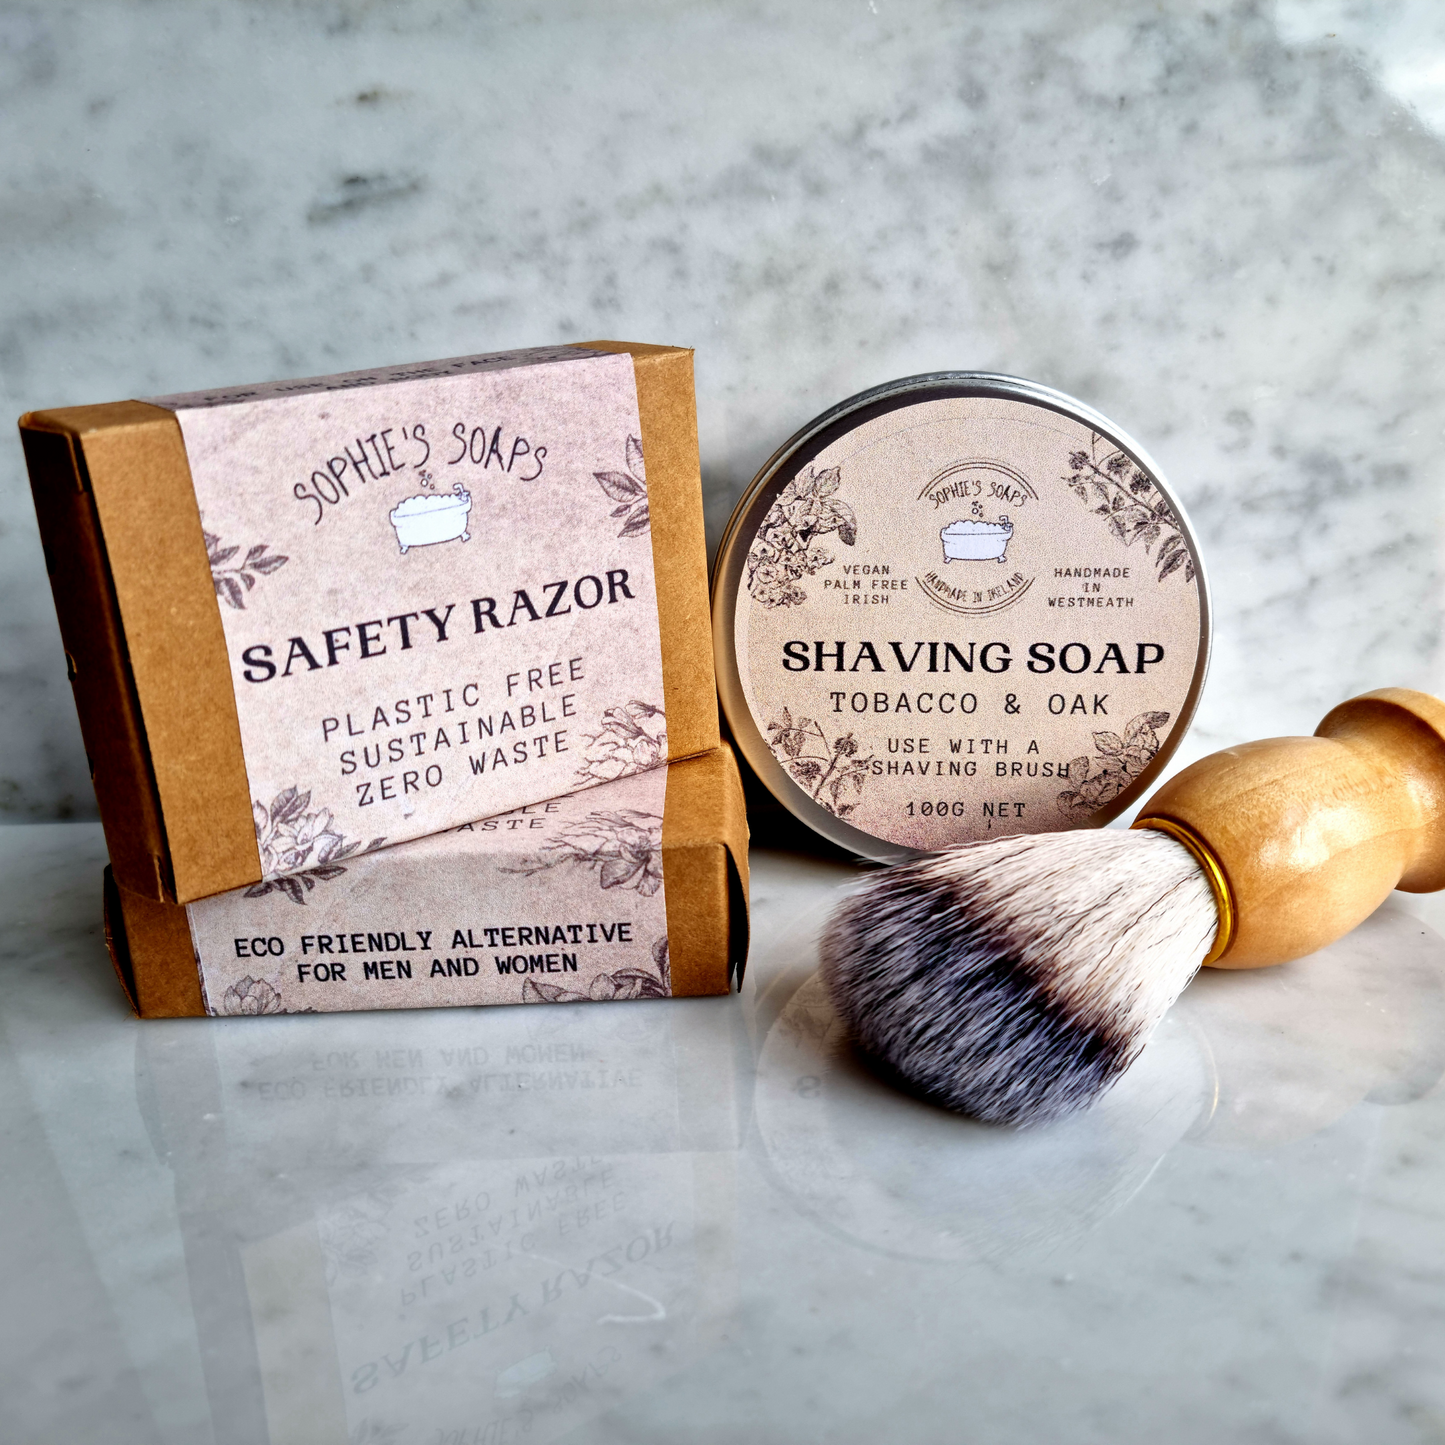 Luxury Shaving Soap - Tobacco & Oak - Sophie's Soaps